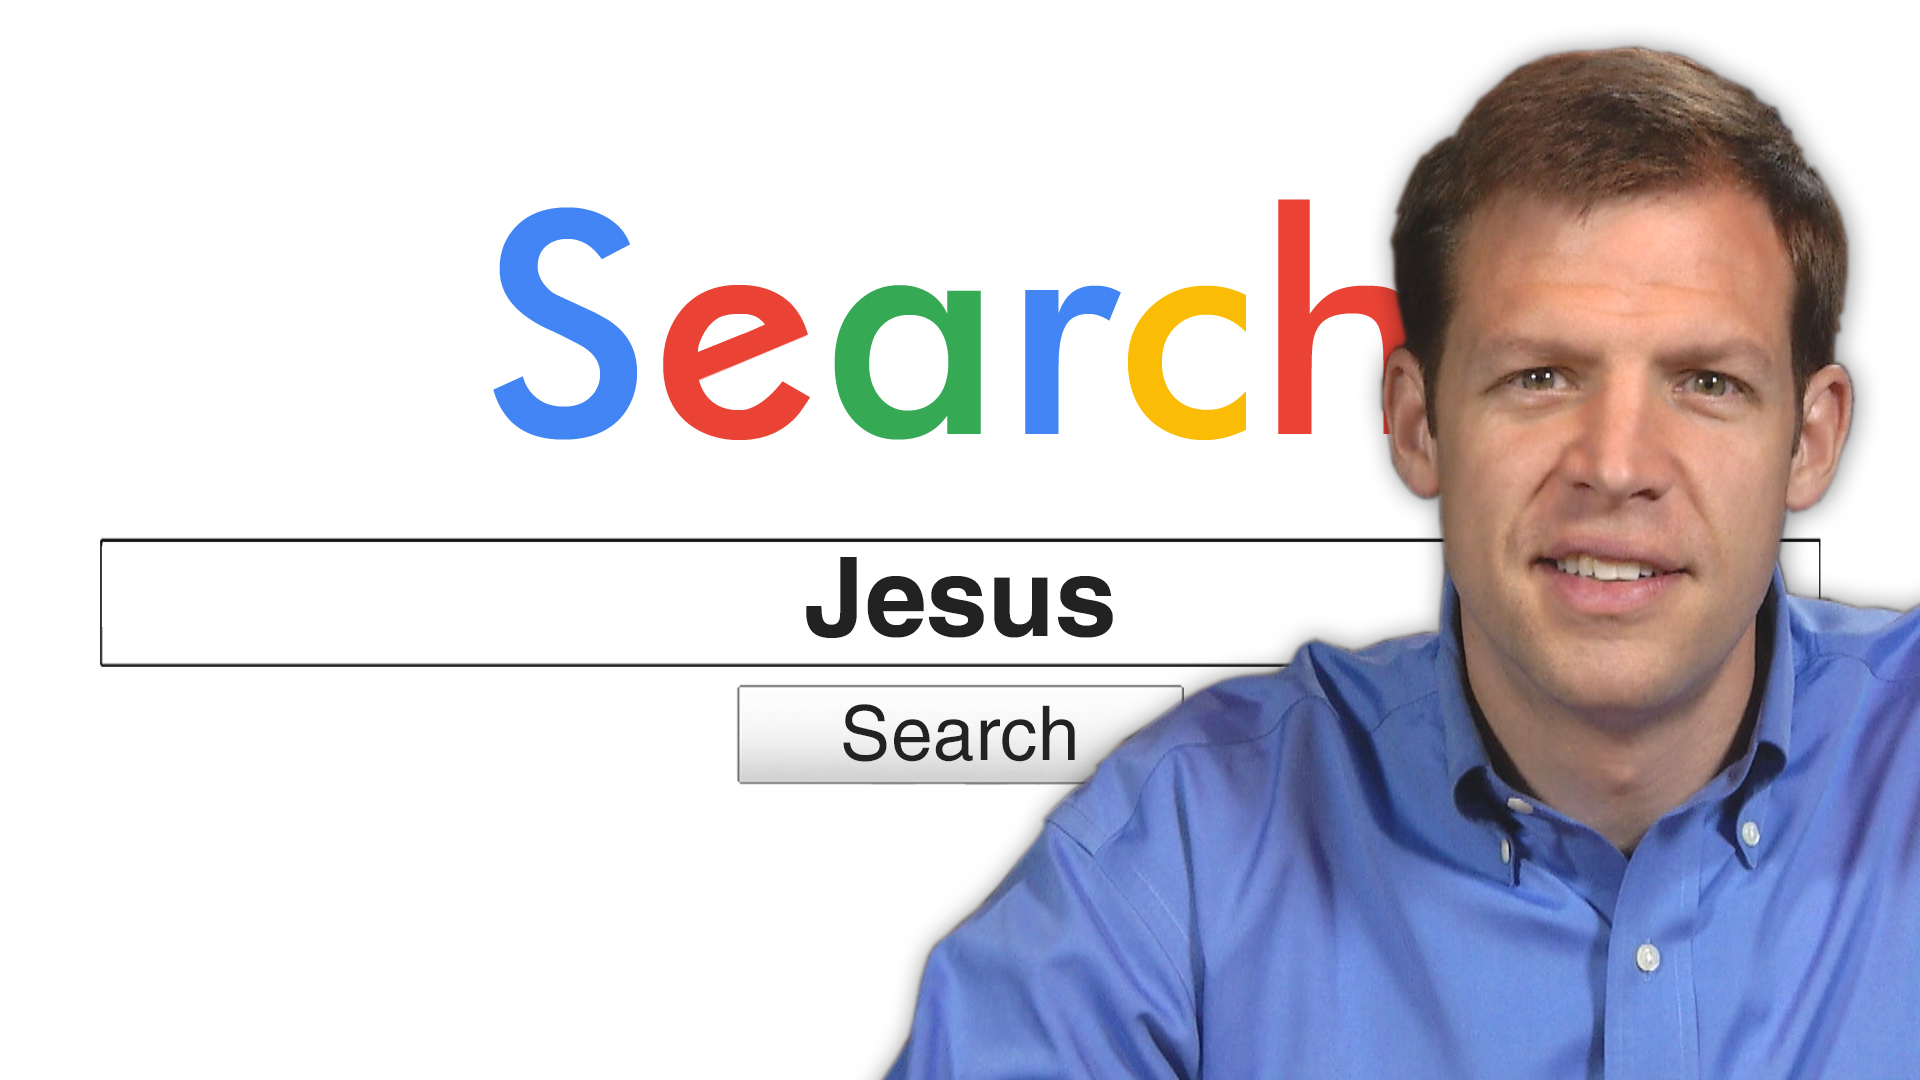 Search Jesus